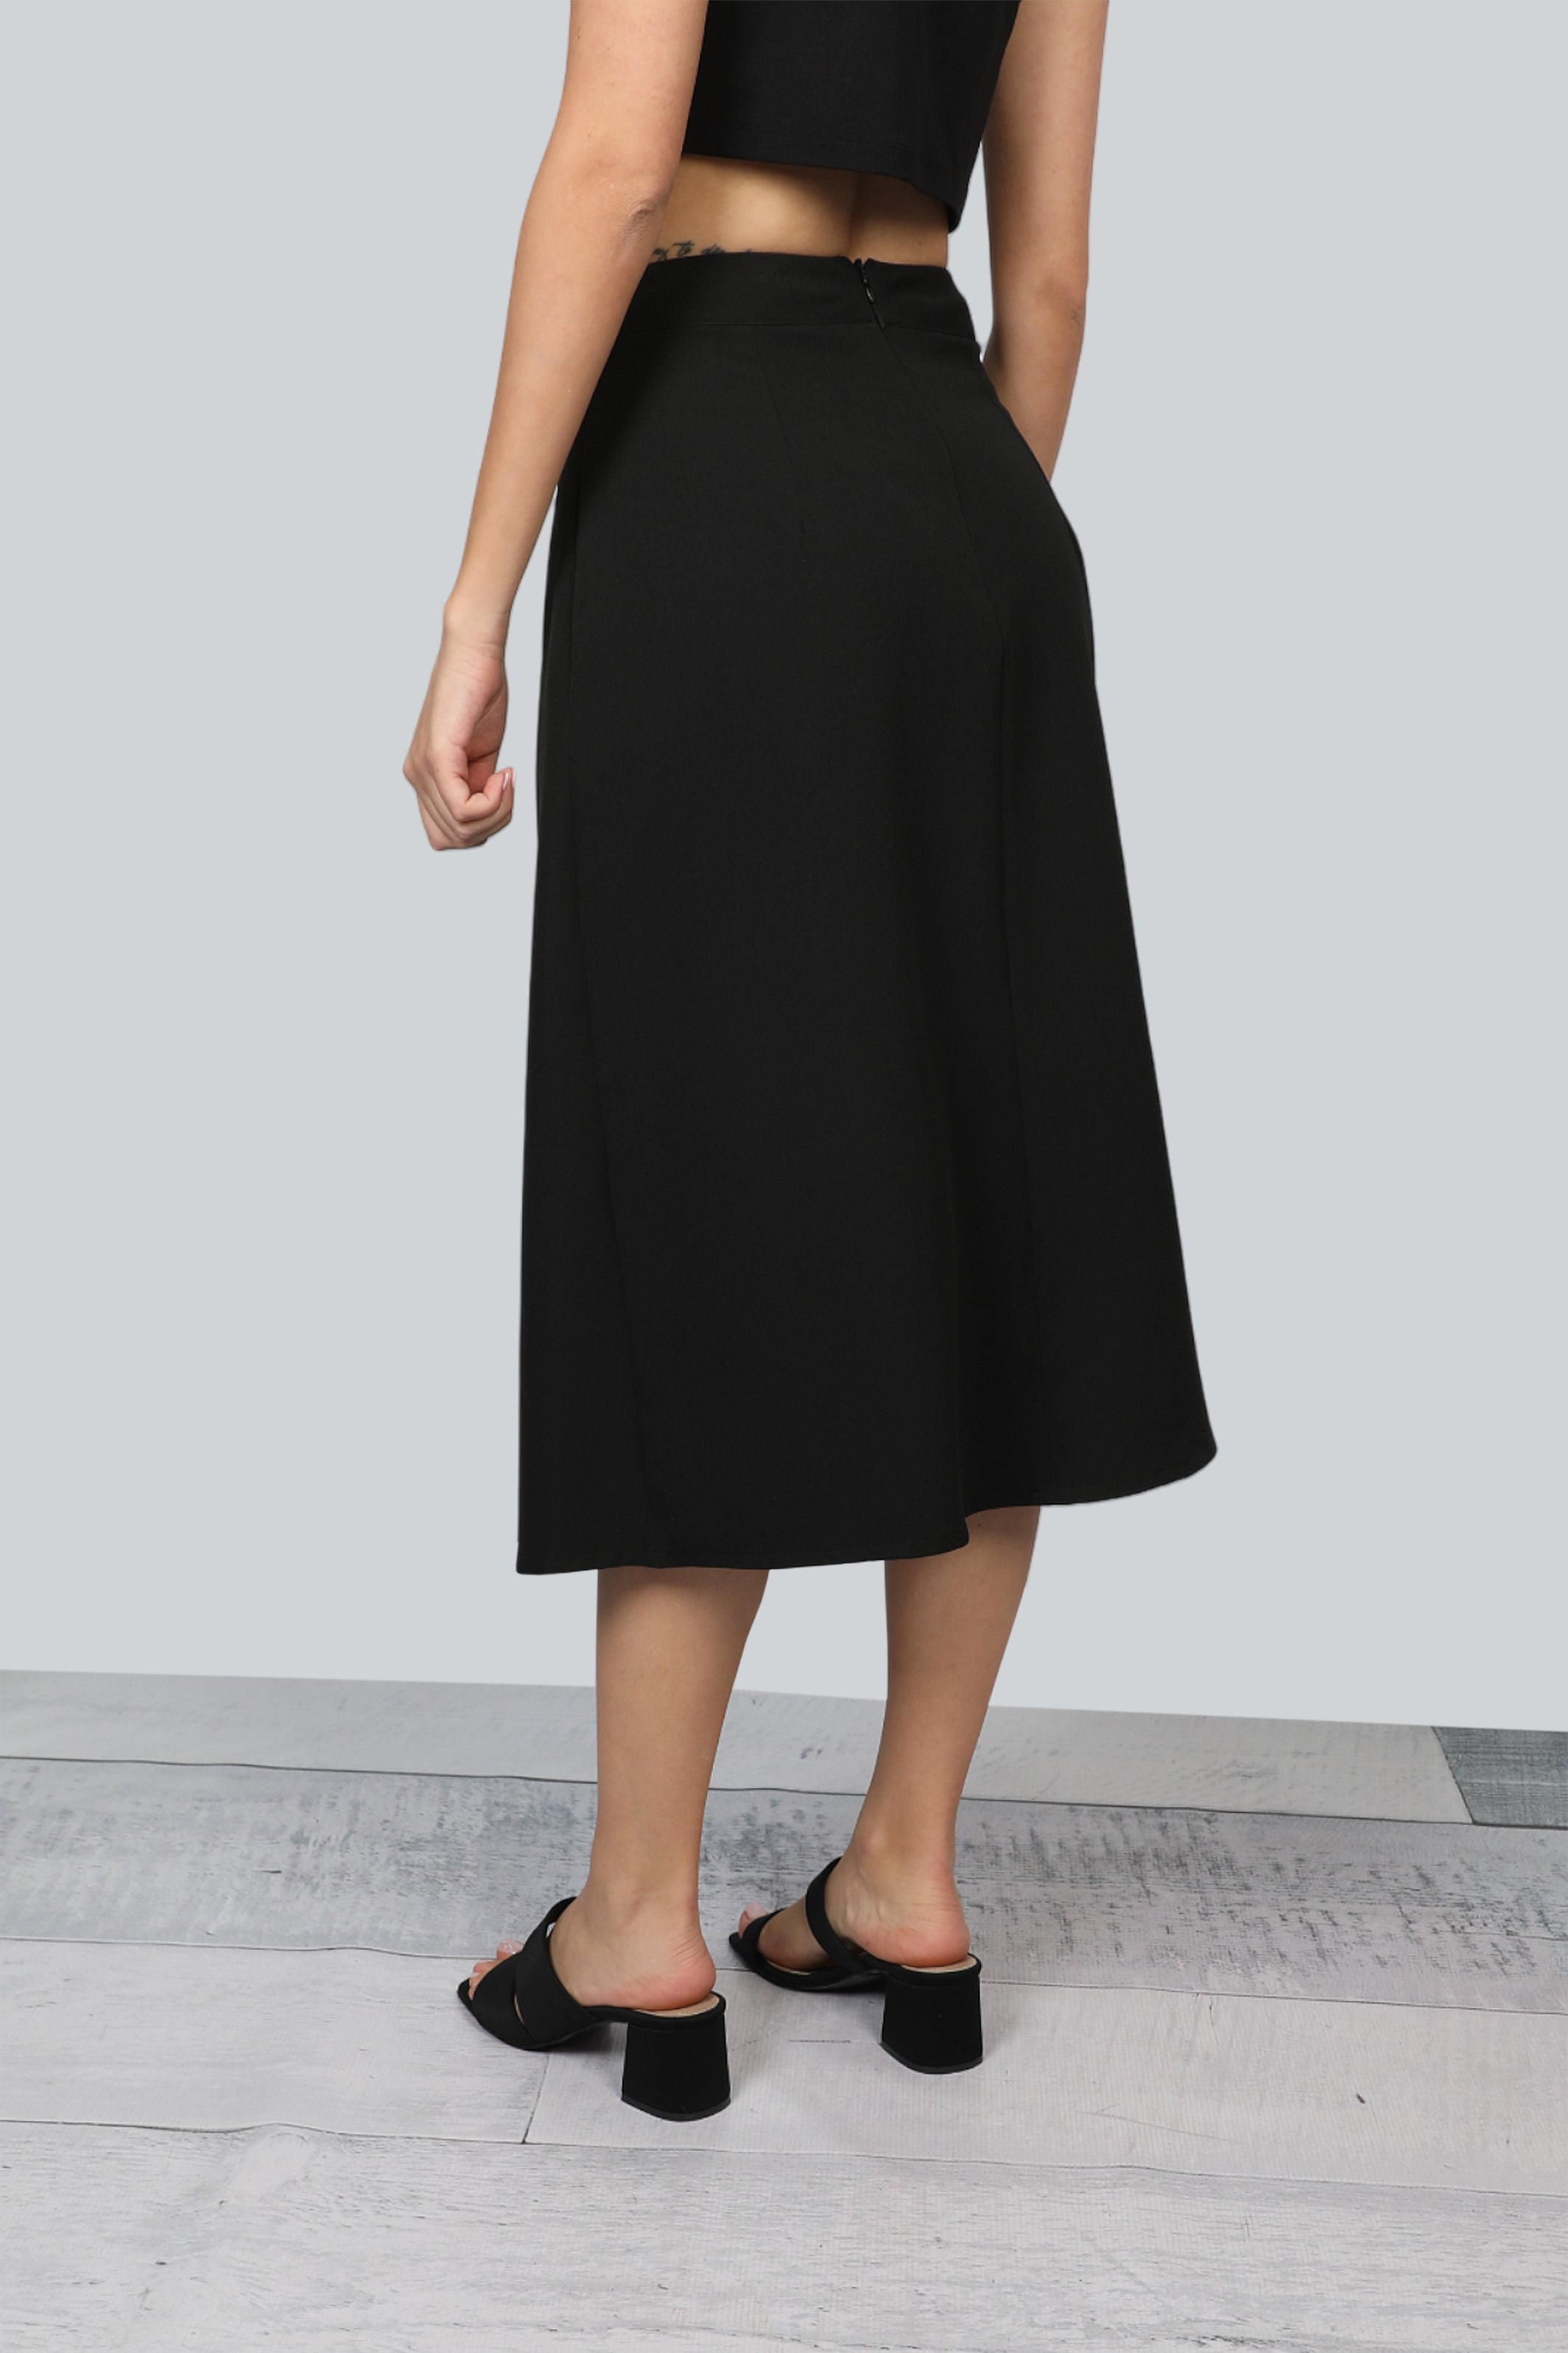 Classy Black Knee Length Skirts With Waist Chain